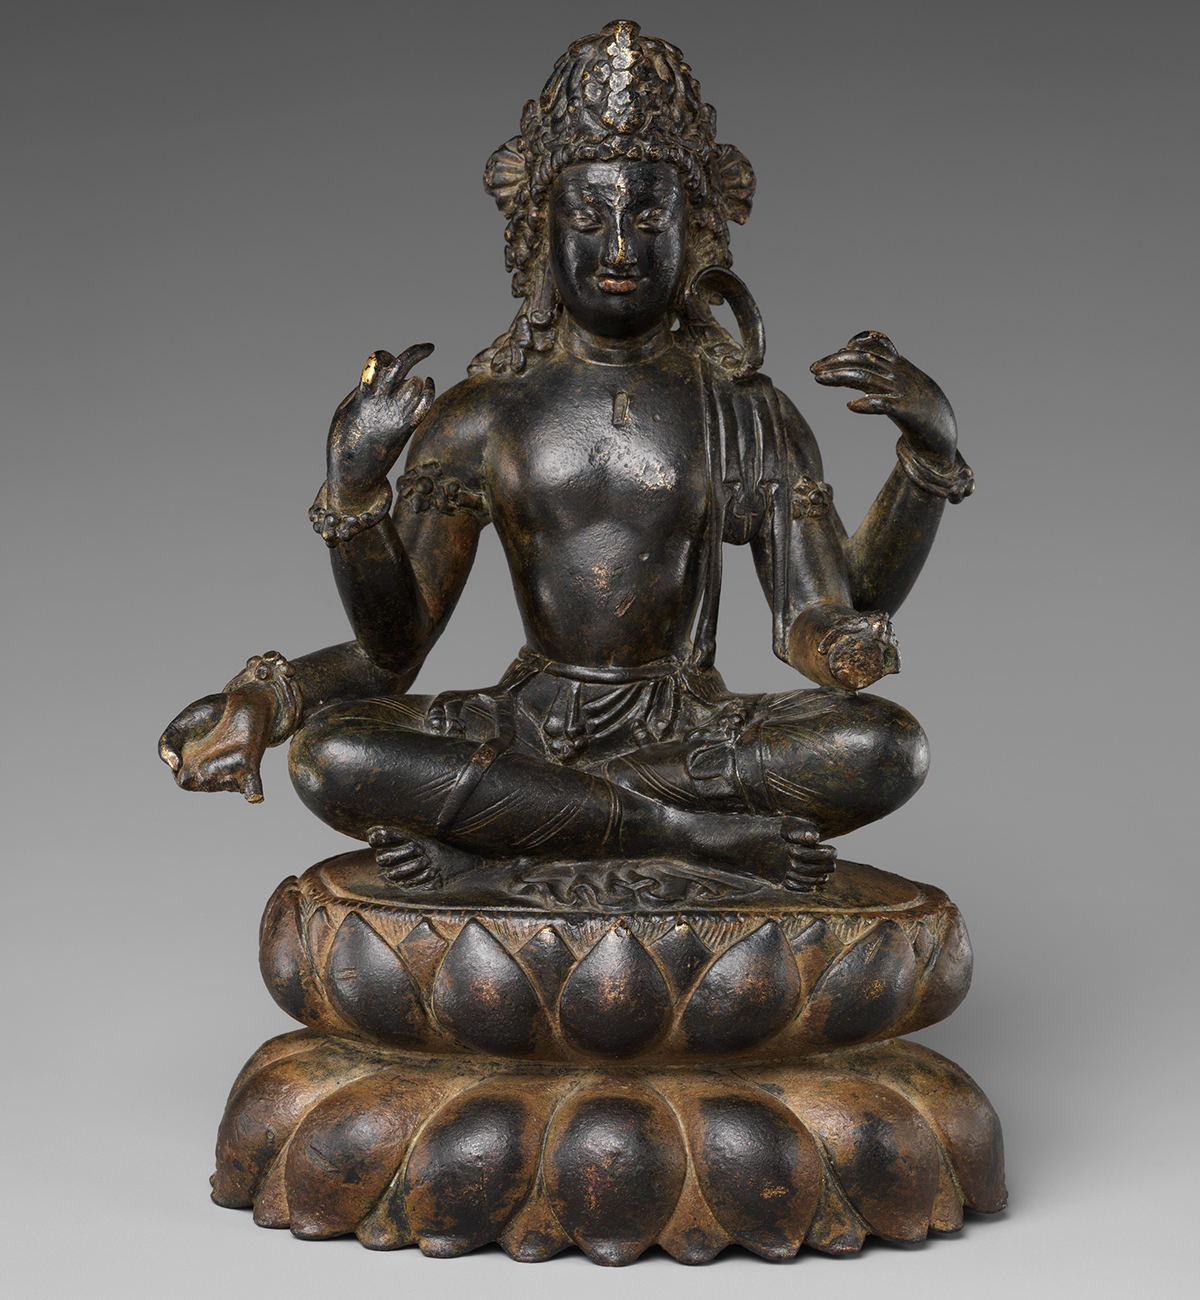 A brass statue depicting the Bodhisattva Avalokiteshvara seated cross-legged on a lotus.